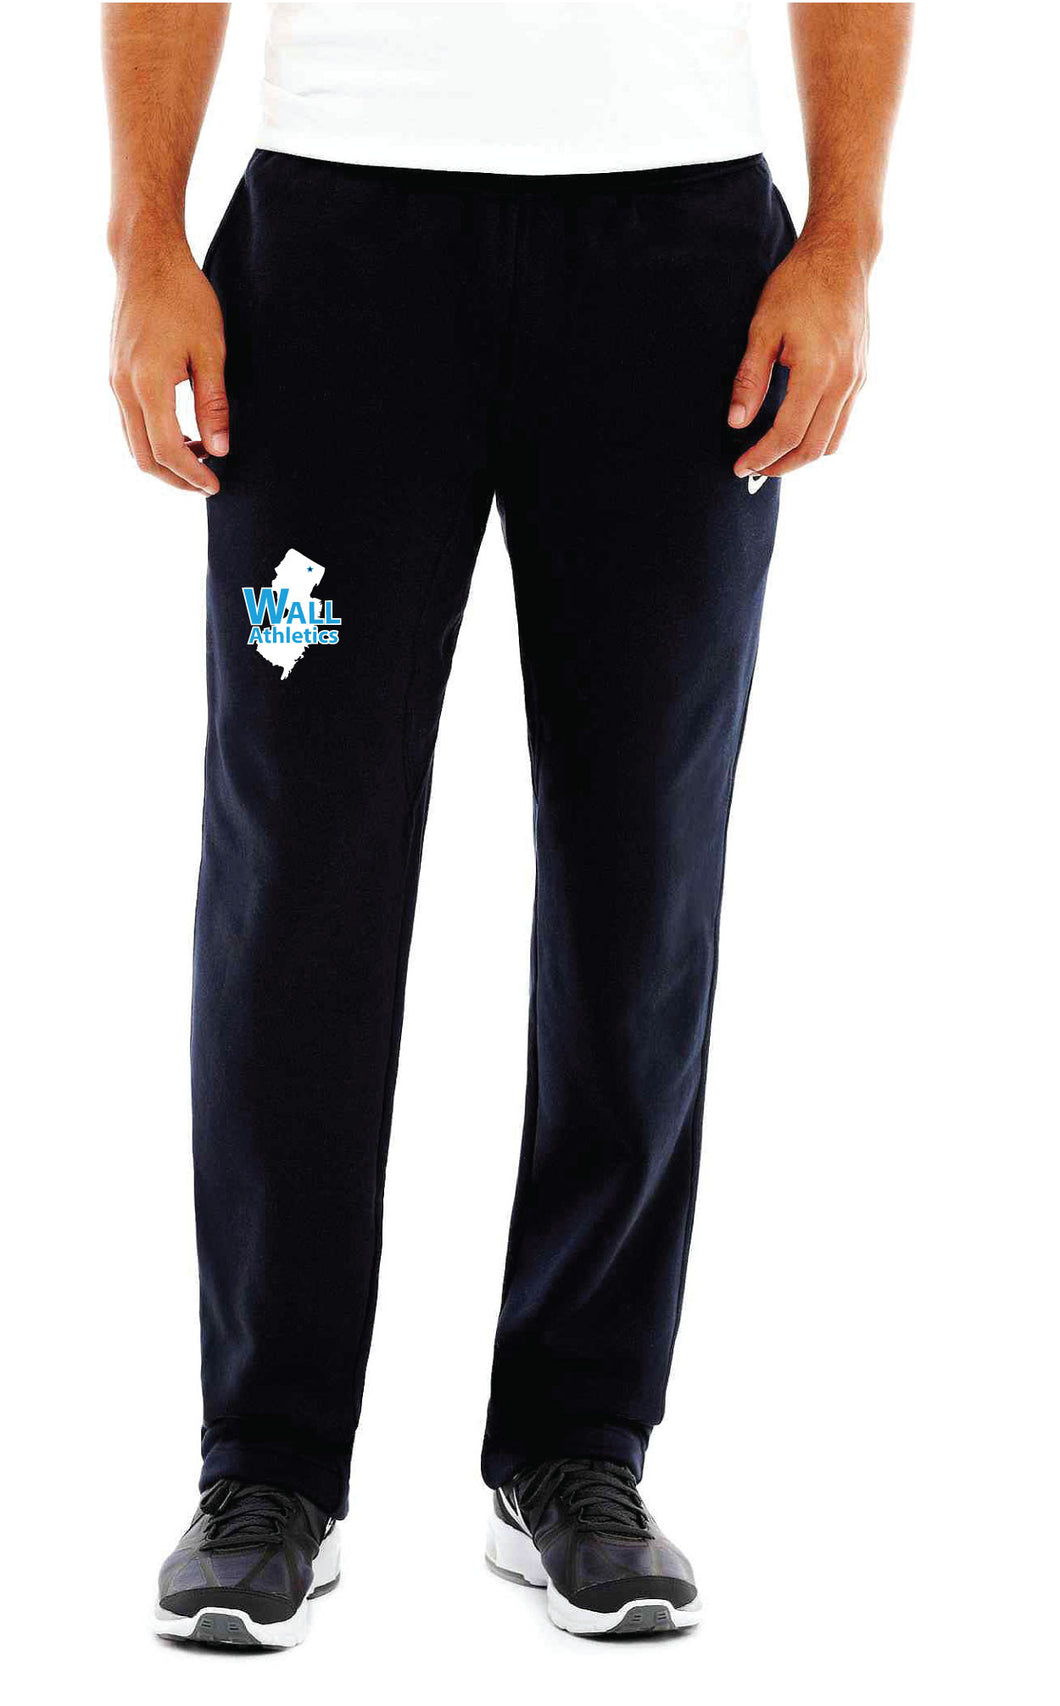 Wall Athletics Nike Fleece Sweatpants Pants - 5KounT